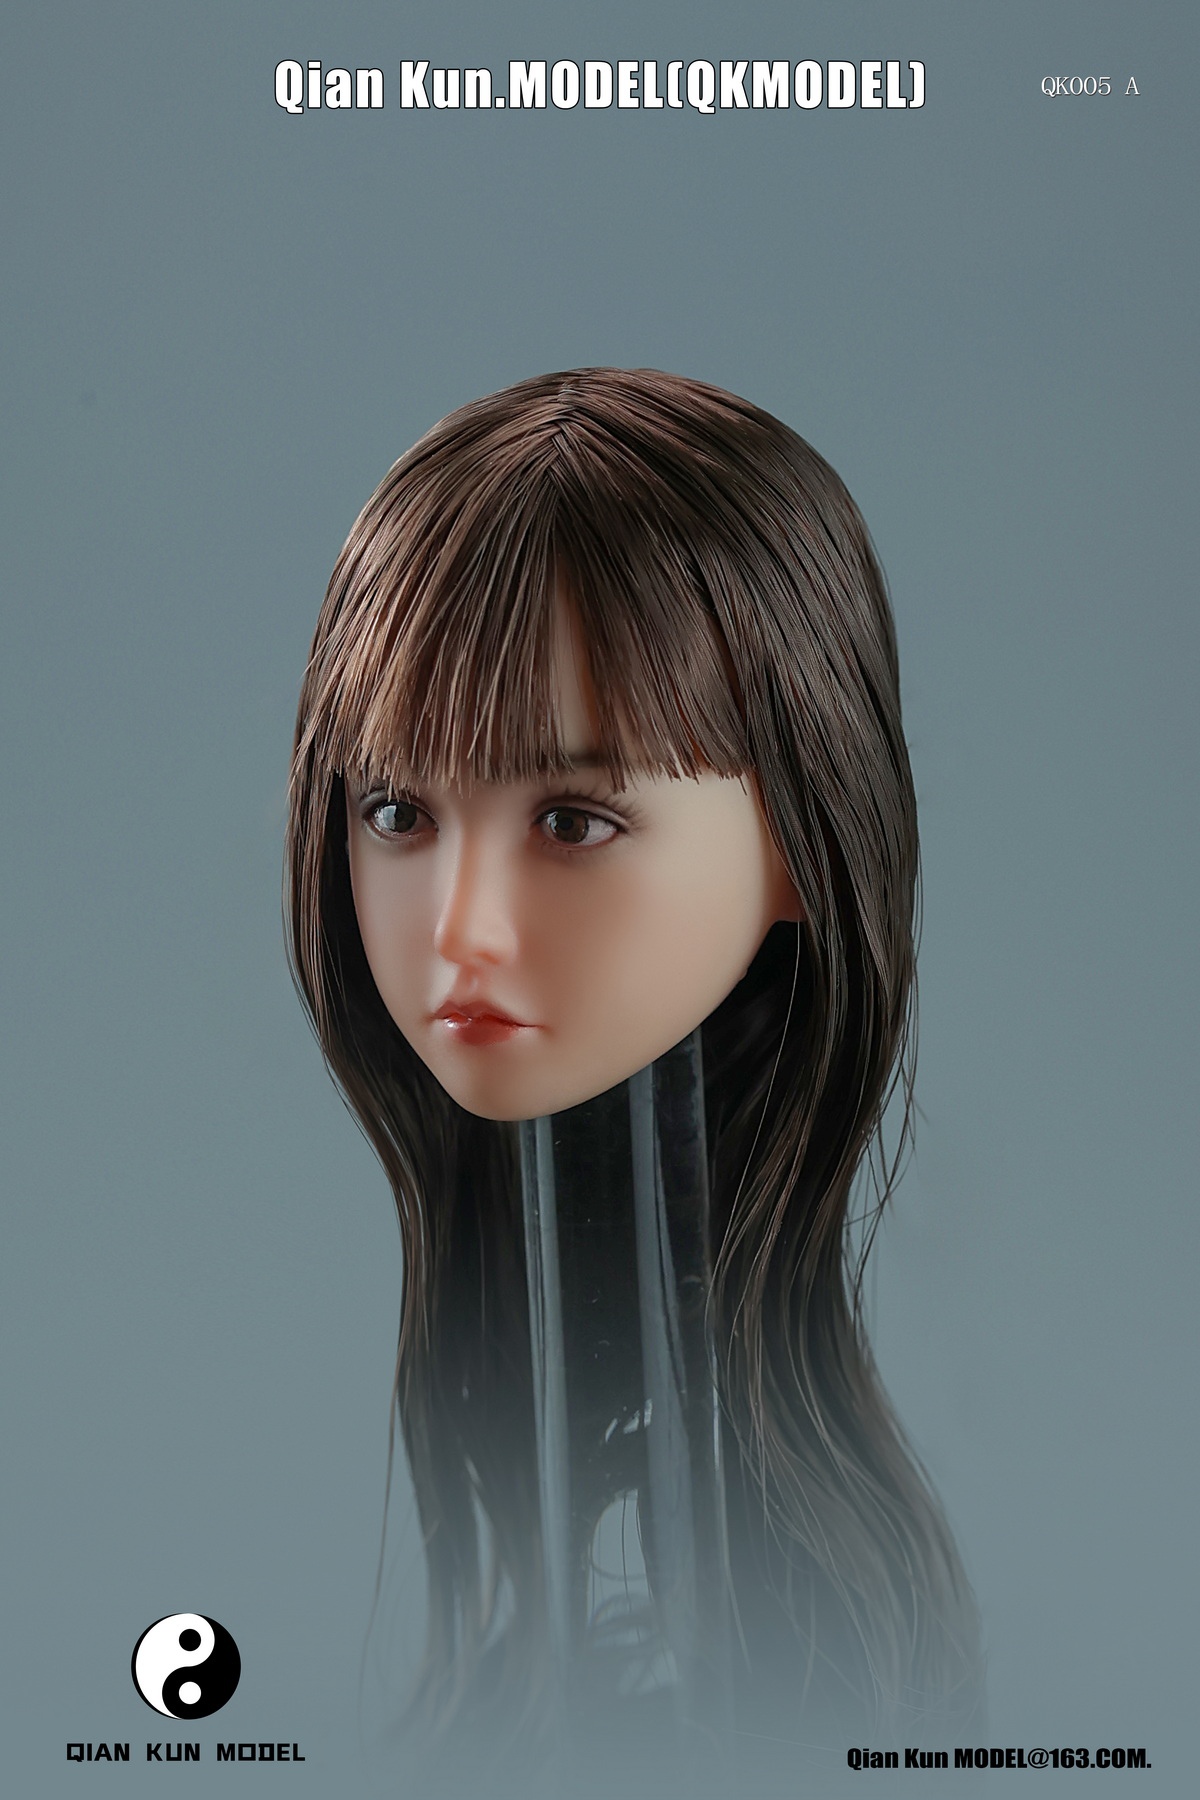 NEW PRODUCT: Qian Kun.Model - Sweet Asian Female Head Sculpture (QK005-A/B/C) 03100